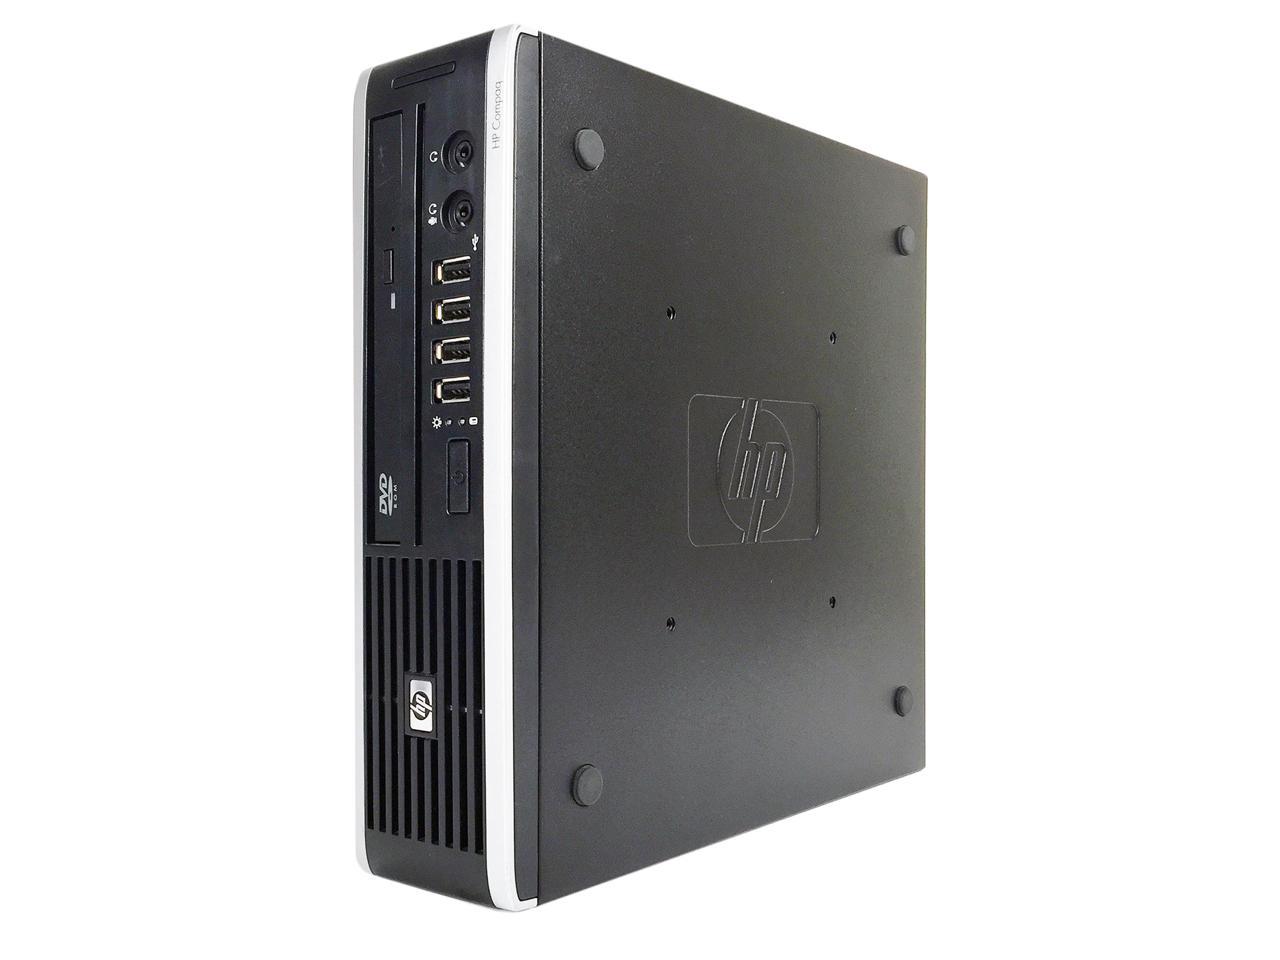 Refurbished HP Grade A Compaq 8200 Elite Ultra-slim PC Intel Core i5 2400S (2.5 GHz), 8 GB DDR3, 250GB, WIFI, Bluetooth 4.0, DVD, Win 10 Home 64-bit (EN/ES), 1 Year Warranty